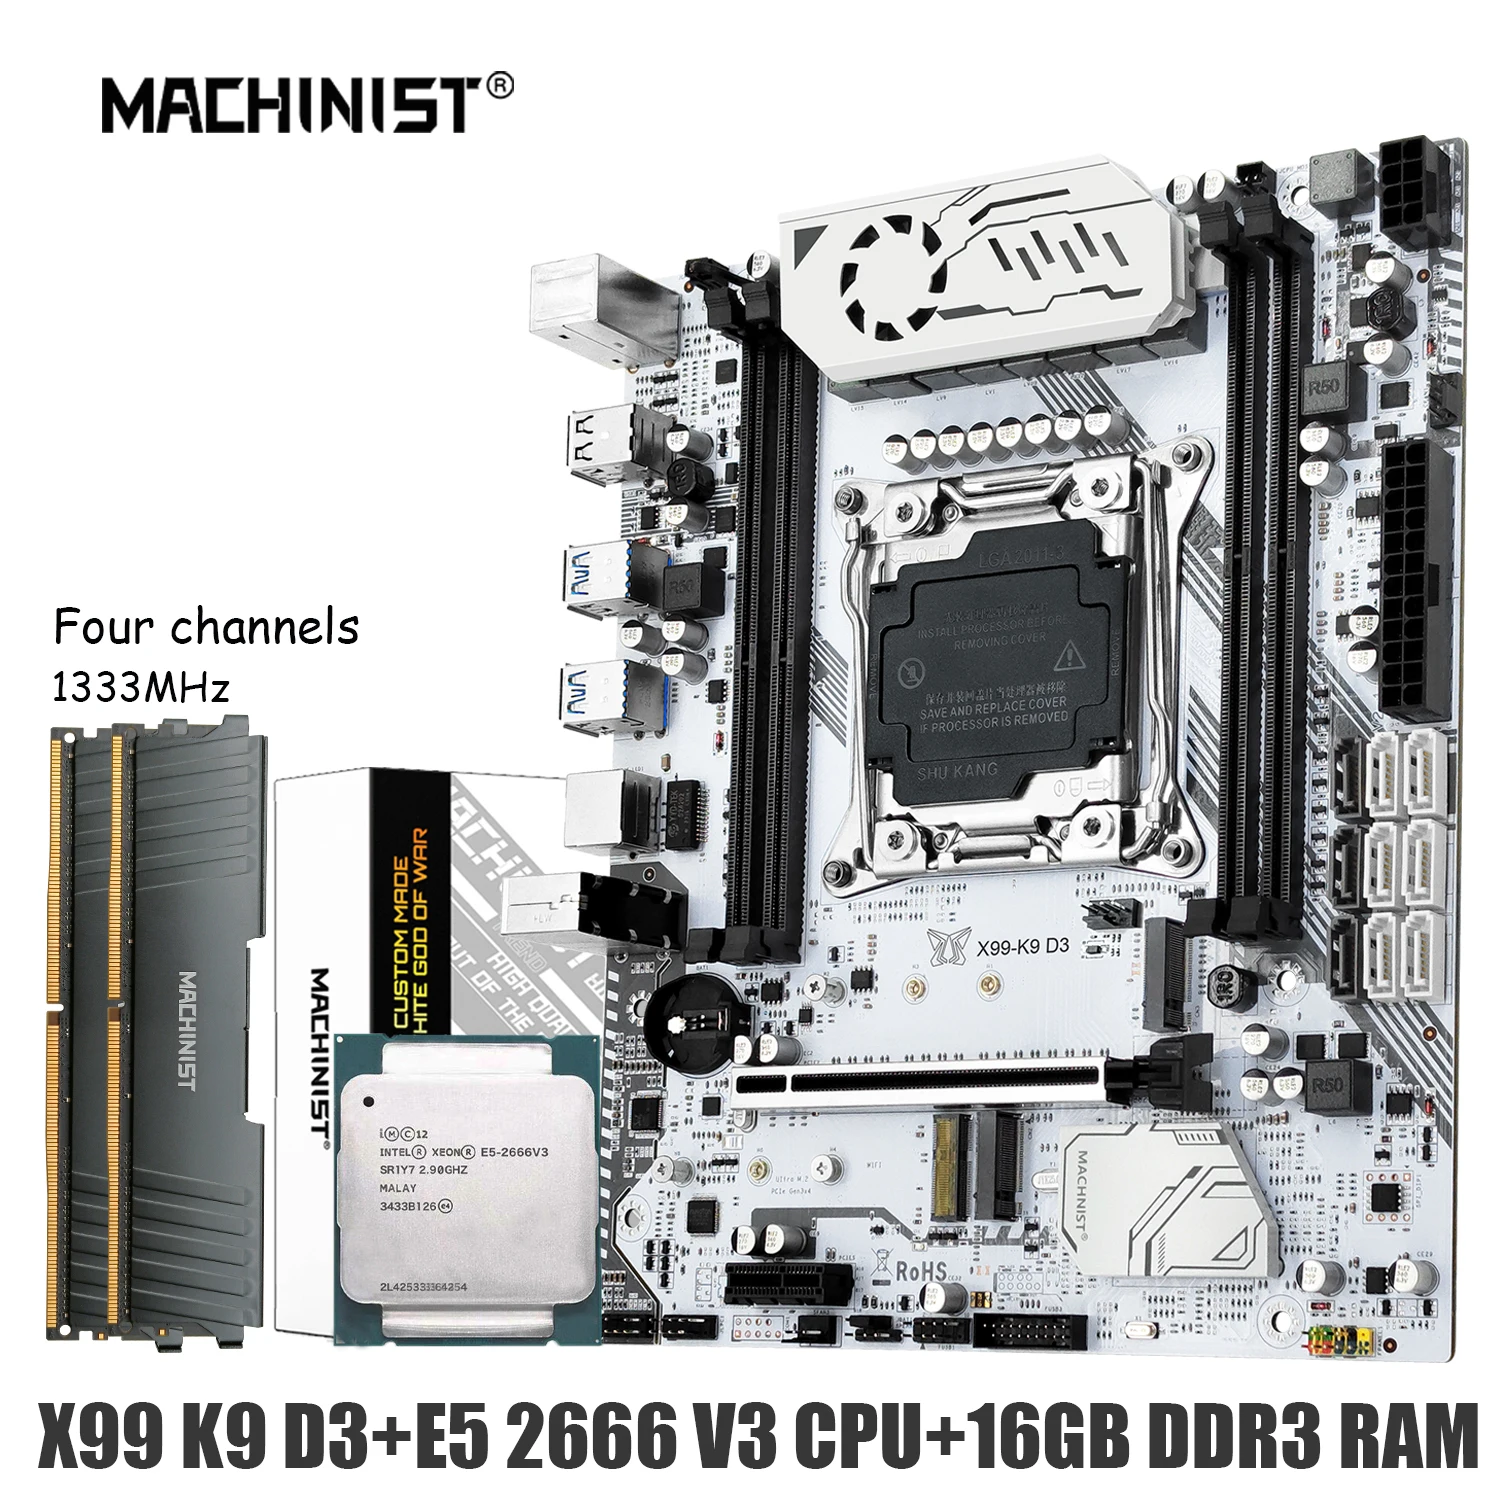 

MACHINIST X99 K9 D3 Motherboard Combo LGA 211-3 E5 2666 V3 Kit Xeon CPU Processor DDR3 RAM 16GB Memory Set NVME M.2 Four Channel